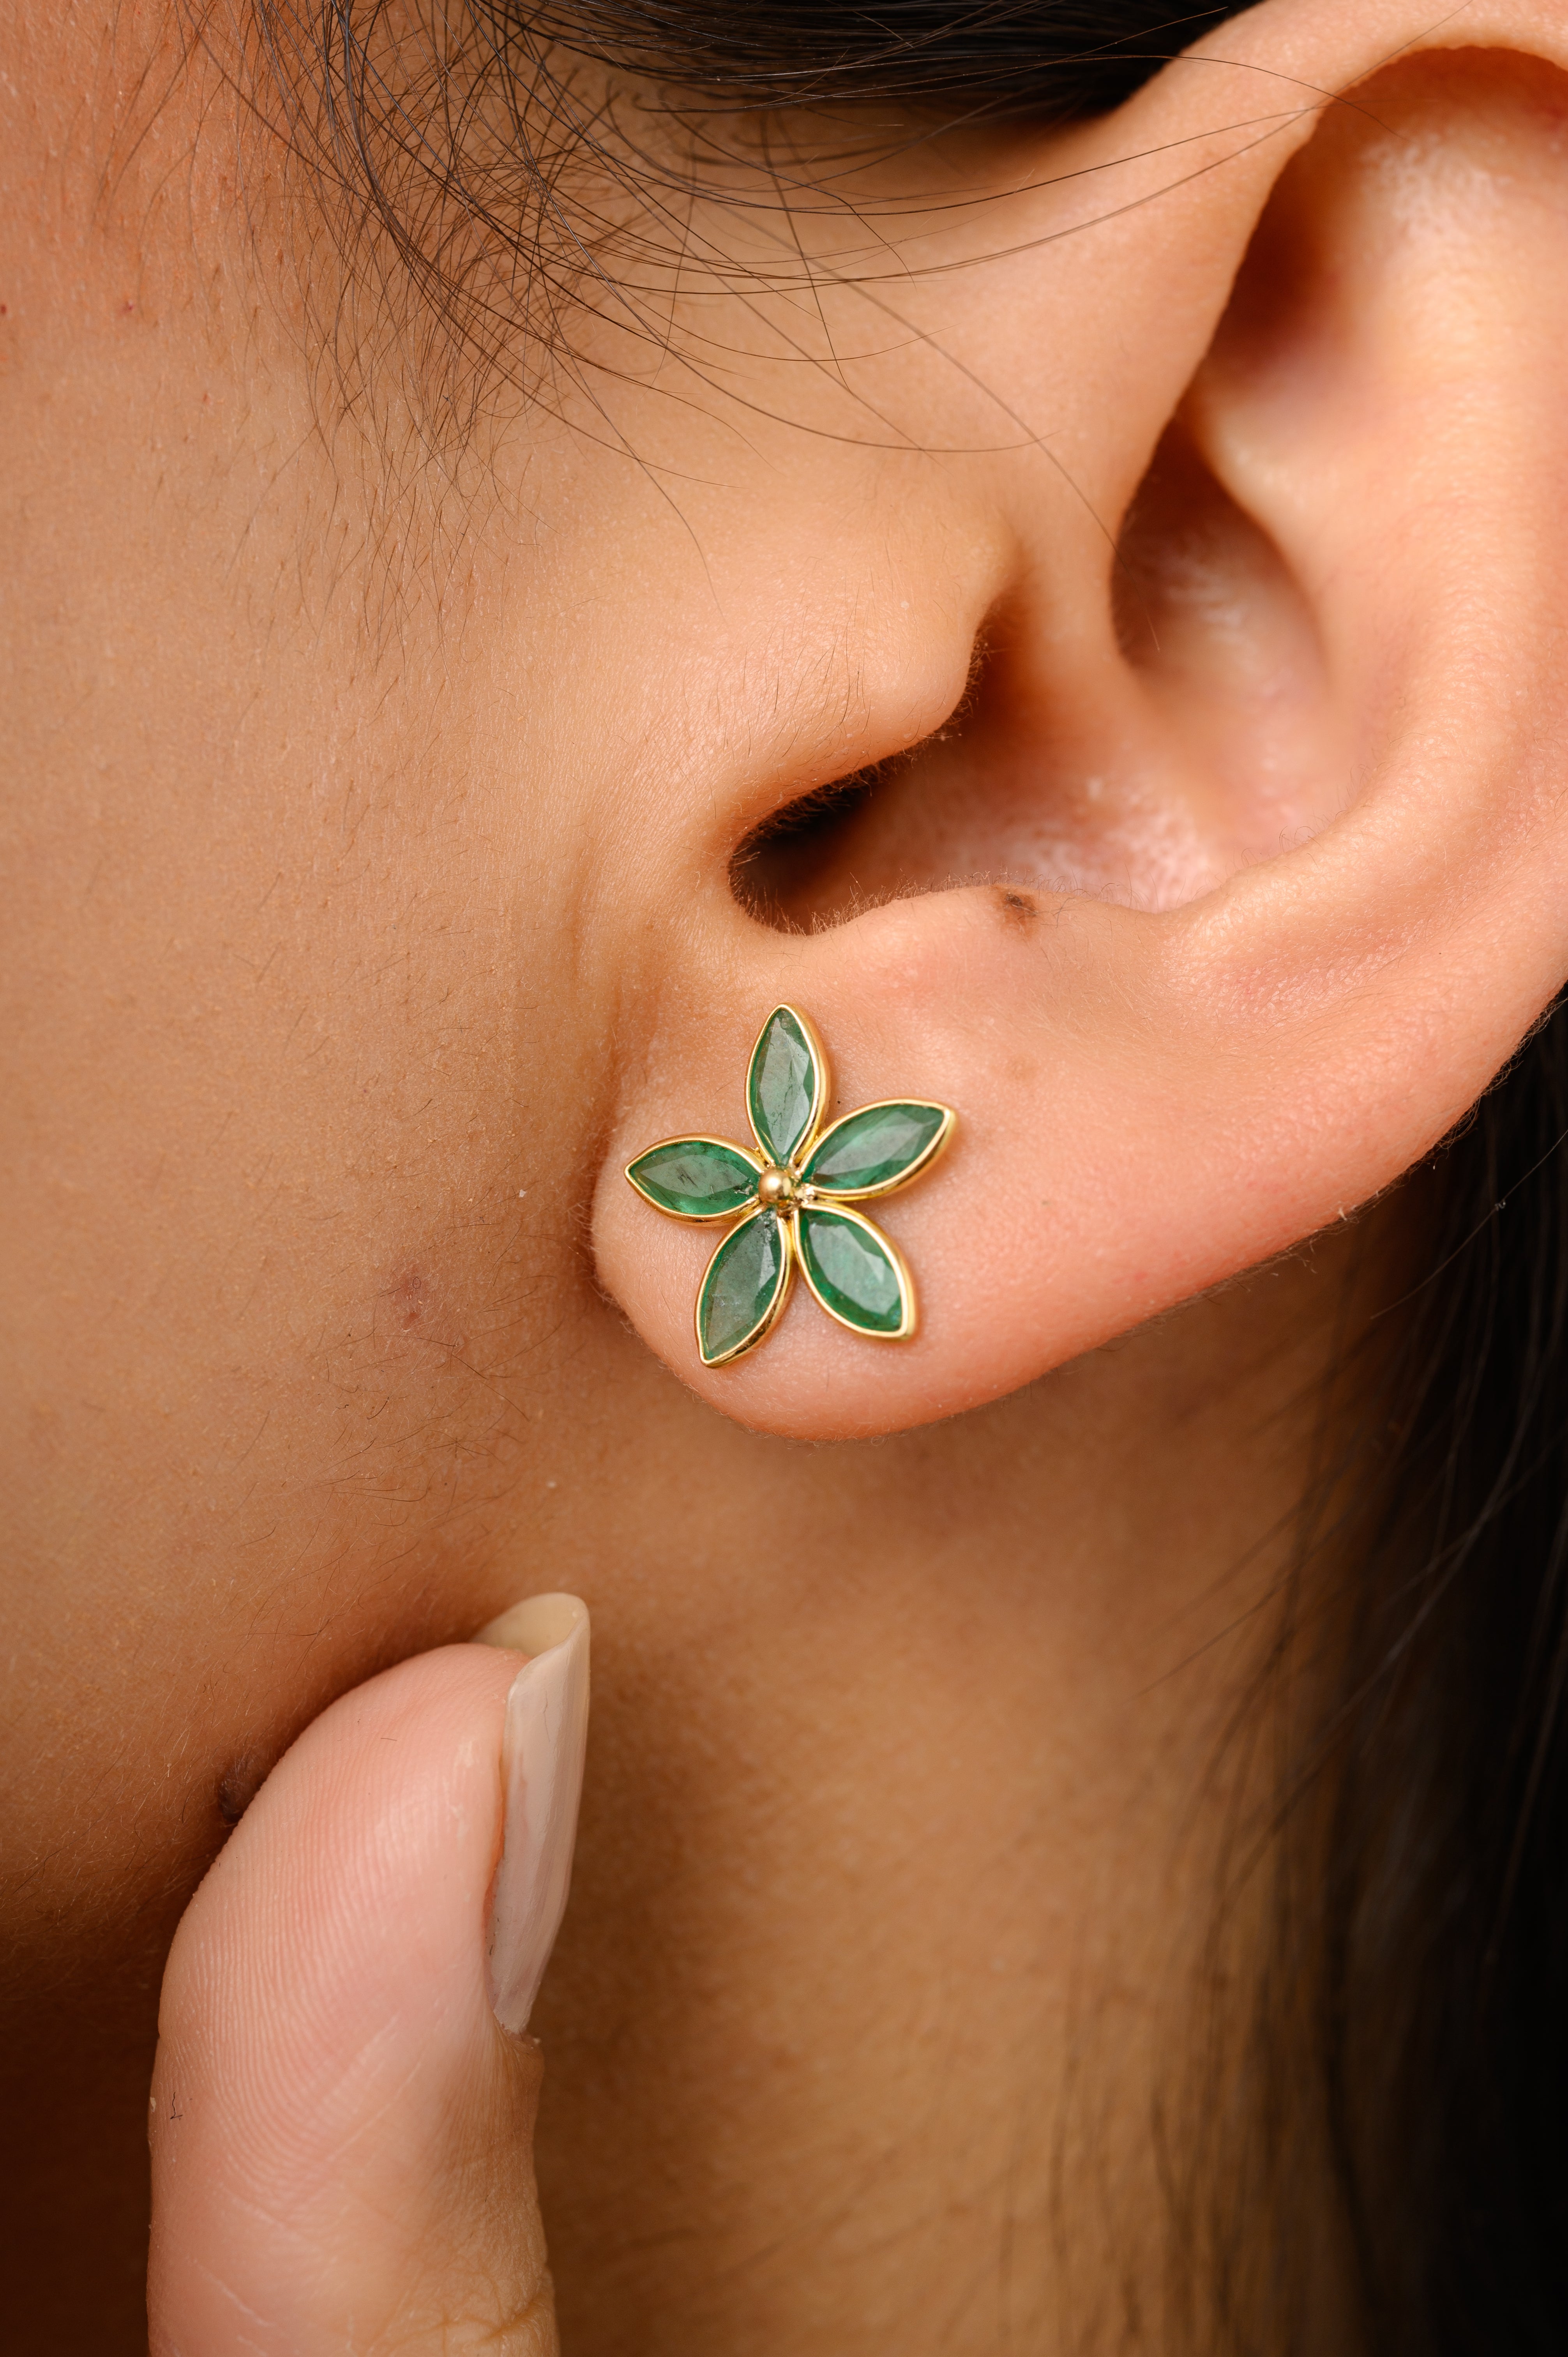 18K Solid Yellow Gold Emerald Flower Stud Earrings